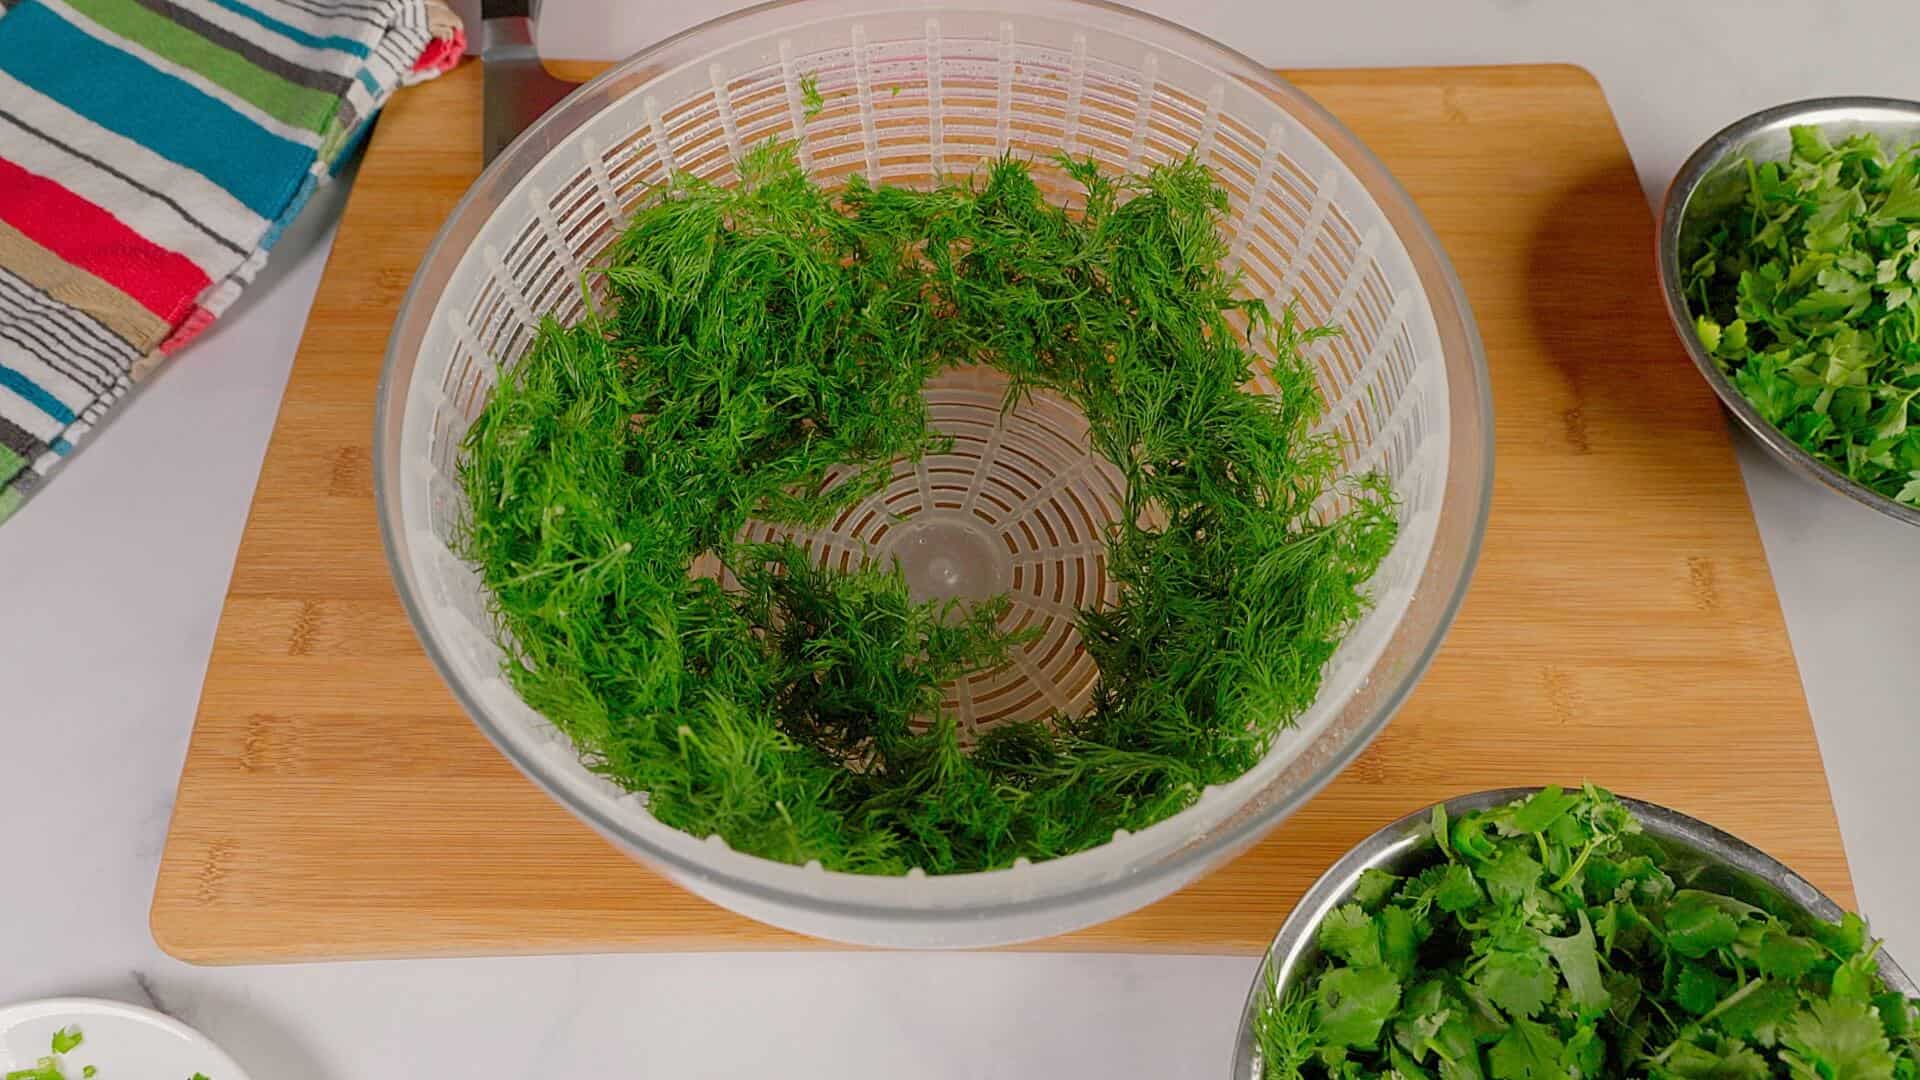 Rinsed herbs being run through a salad spinner.